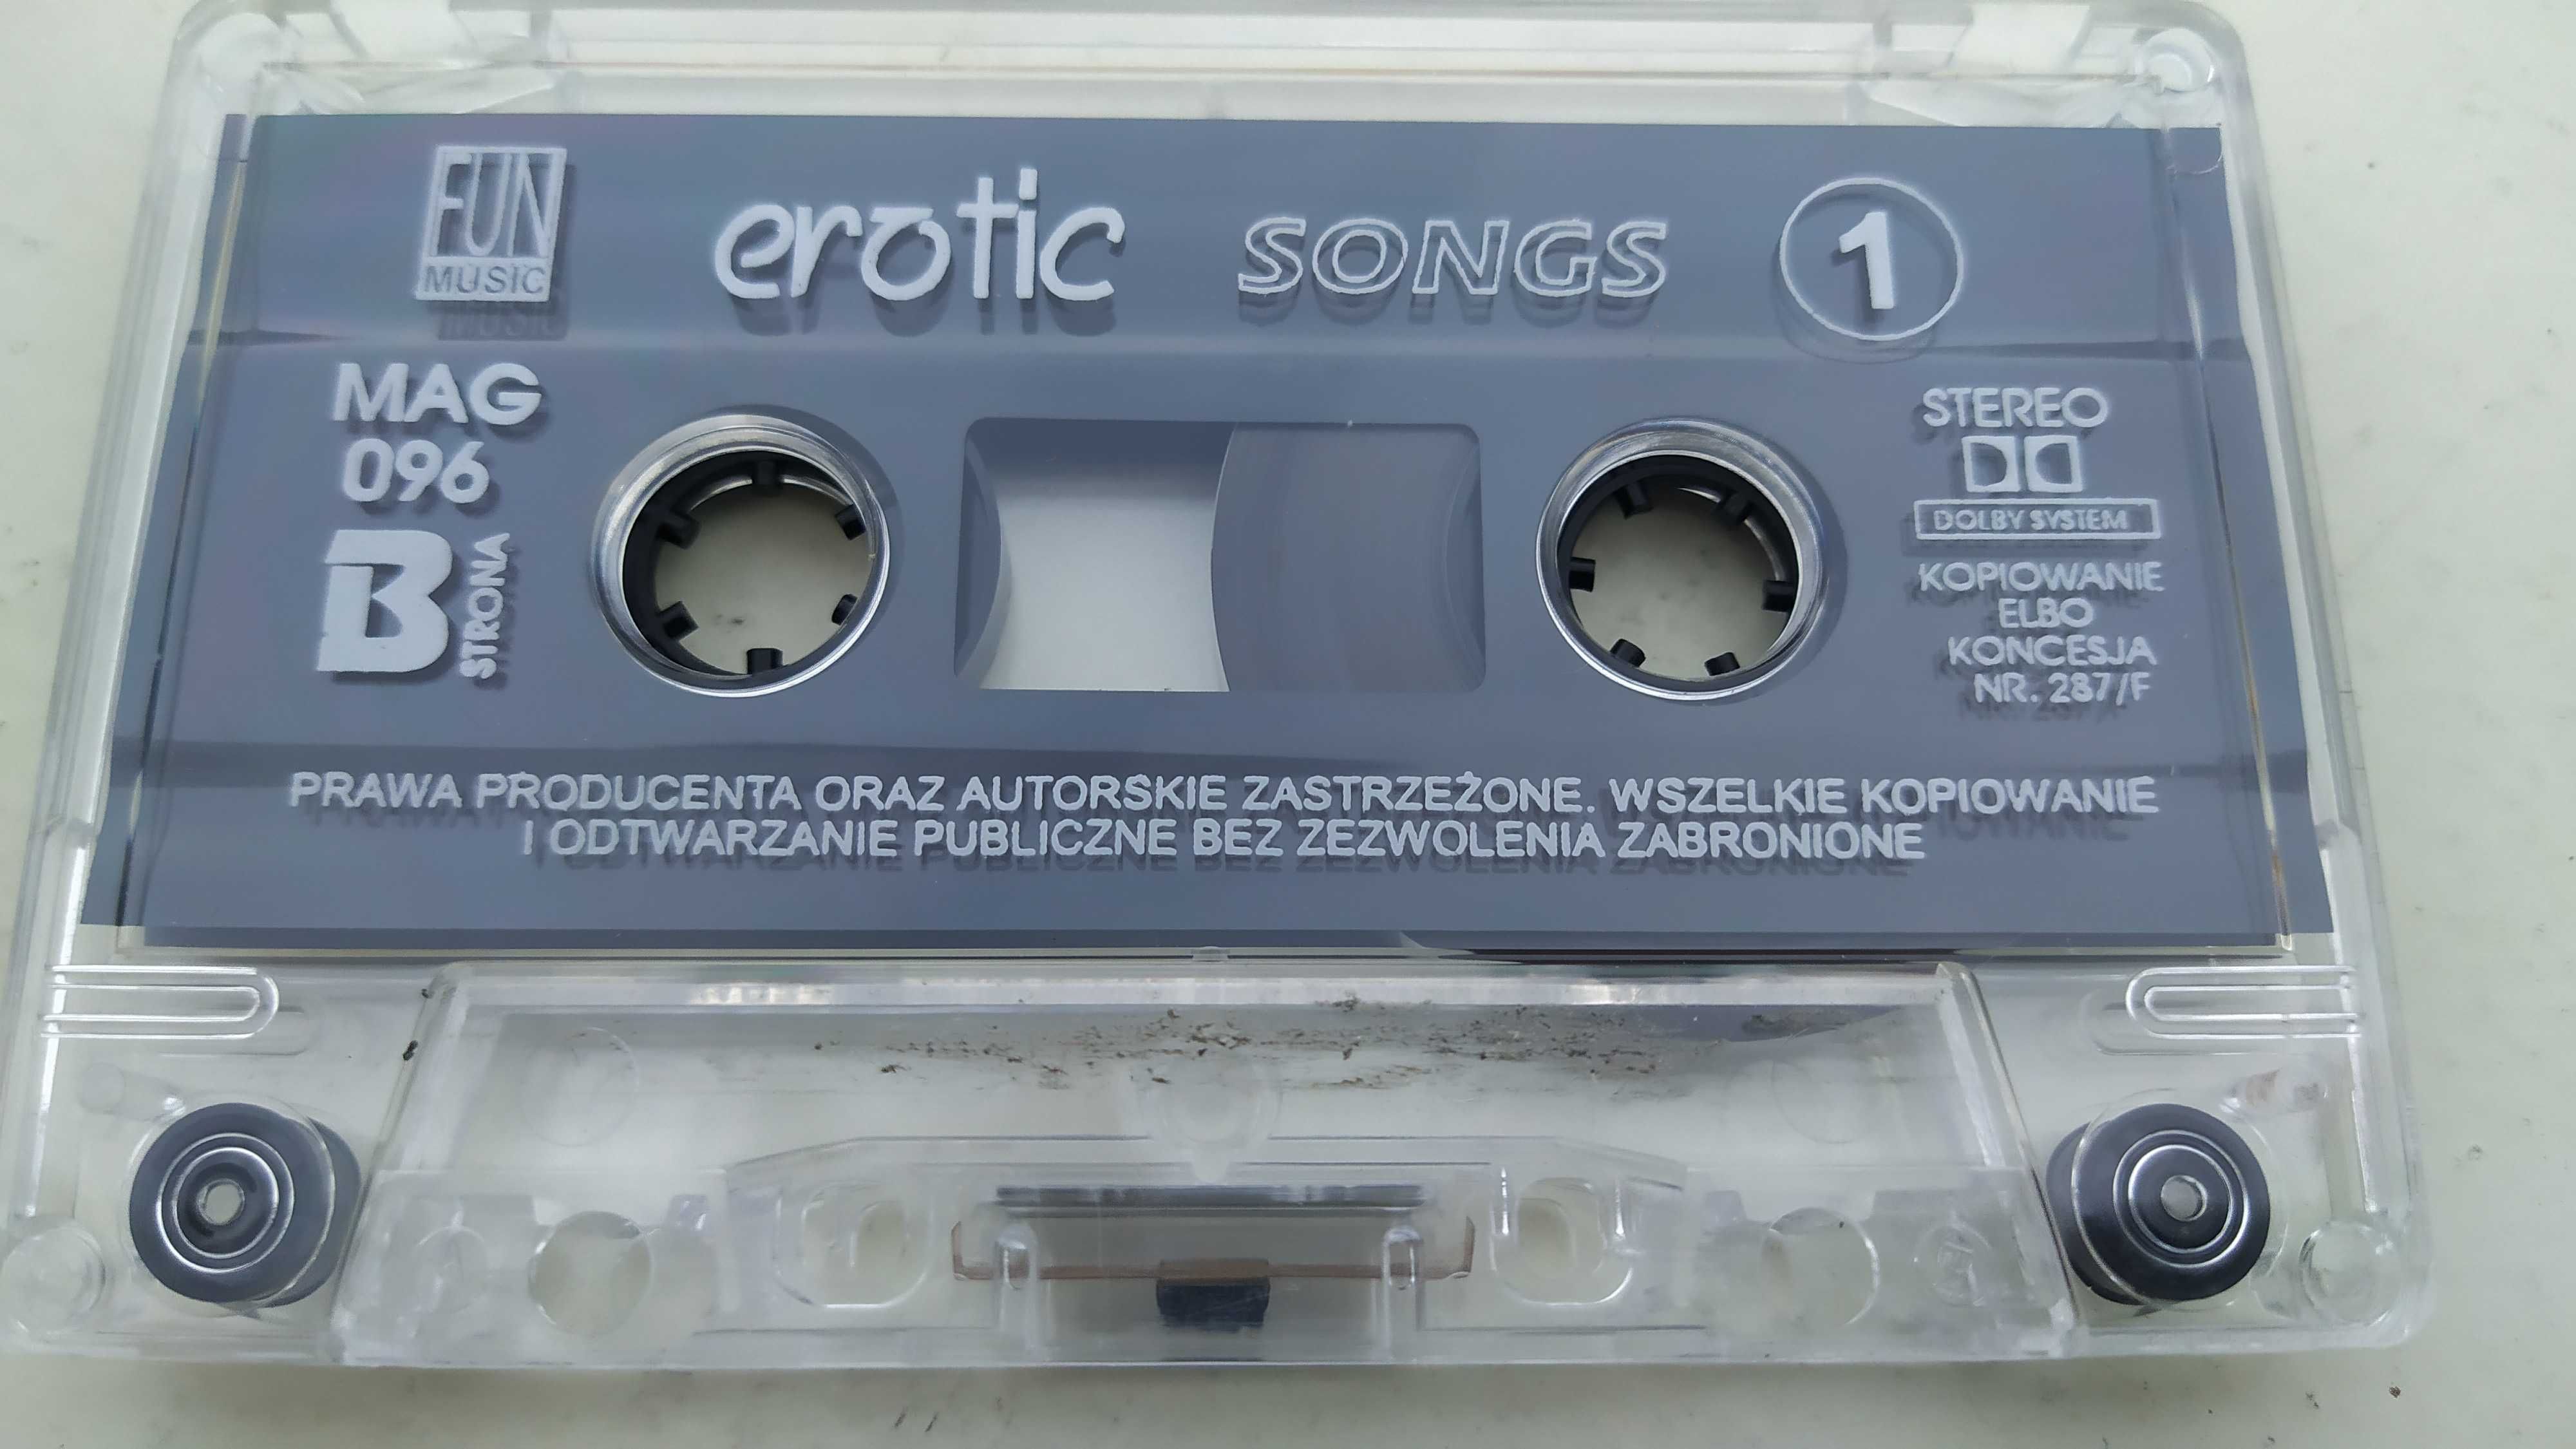 Erotic songs 1 kaseta MC